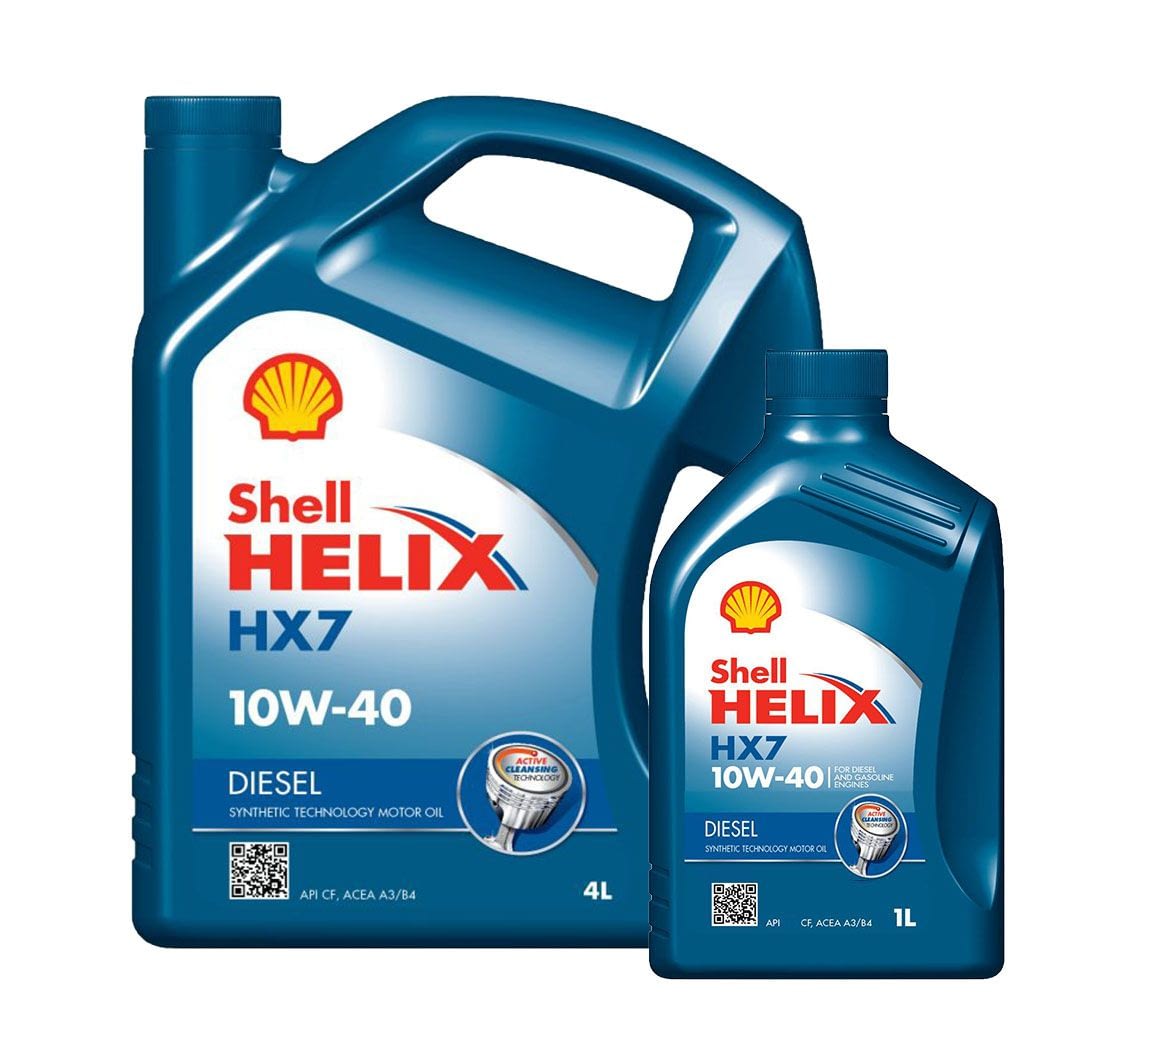 Моторное масло shell helix цена. Shell Helix HX 7 Diesel 10 40. Shell Helix hx7 SN Plus 10w-40 1л. Масло Shell 10w 40 hx7 дизель. Масло моторное Shell Helix hx7 10w-40, 1l.